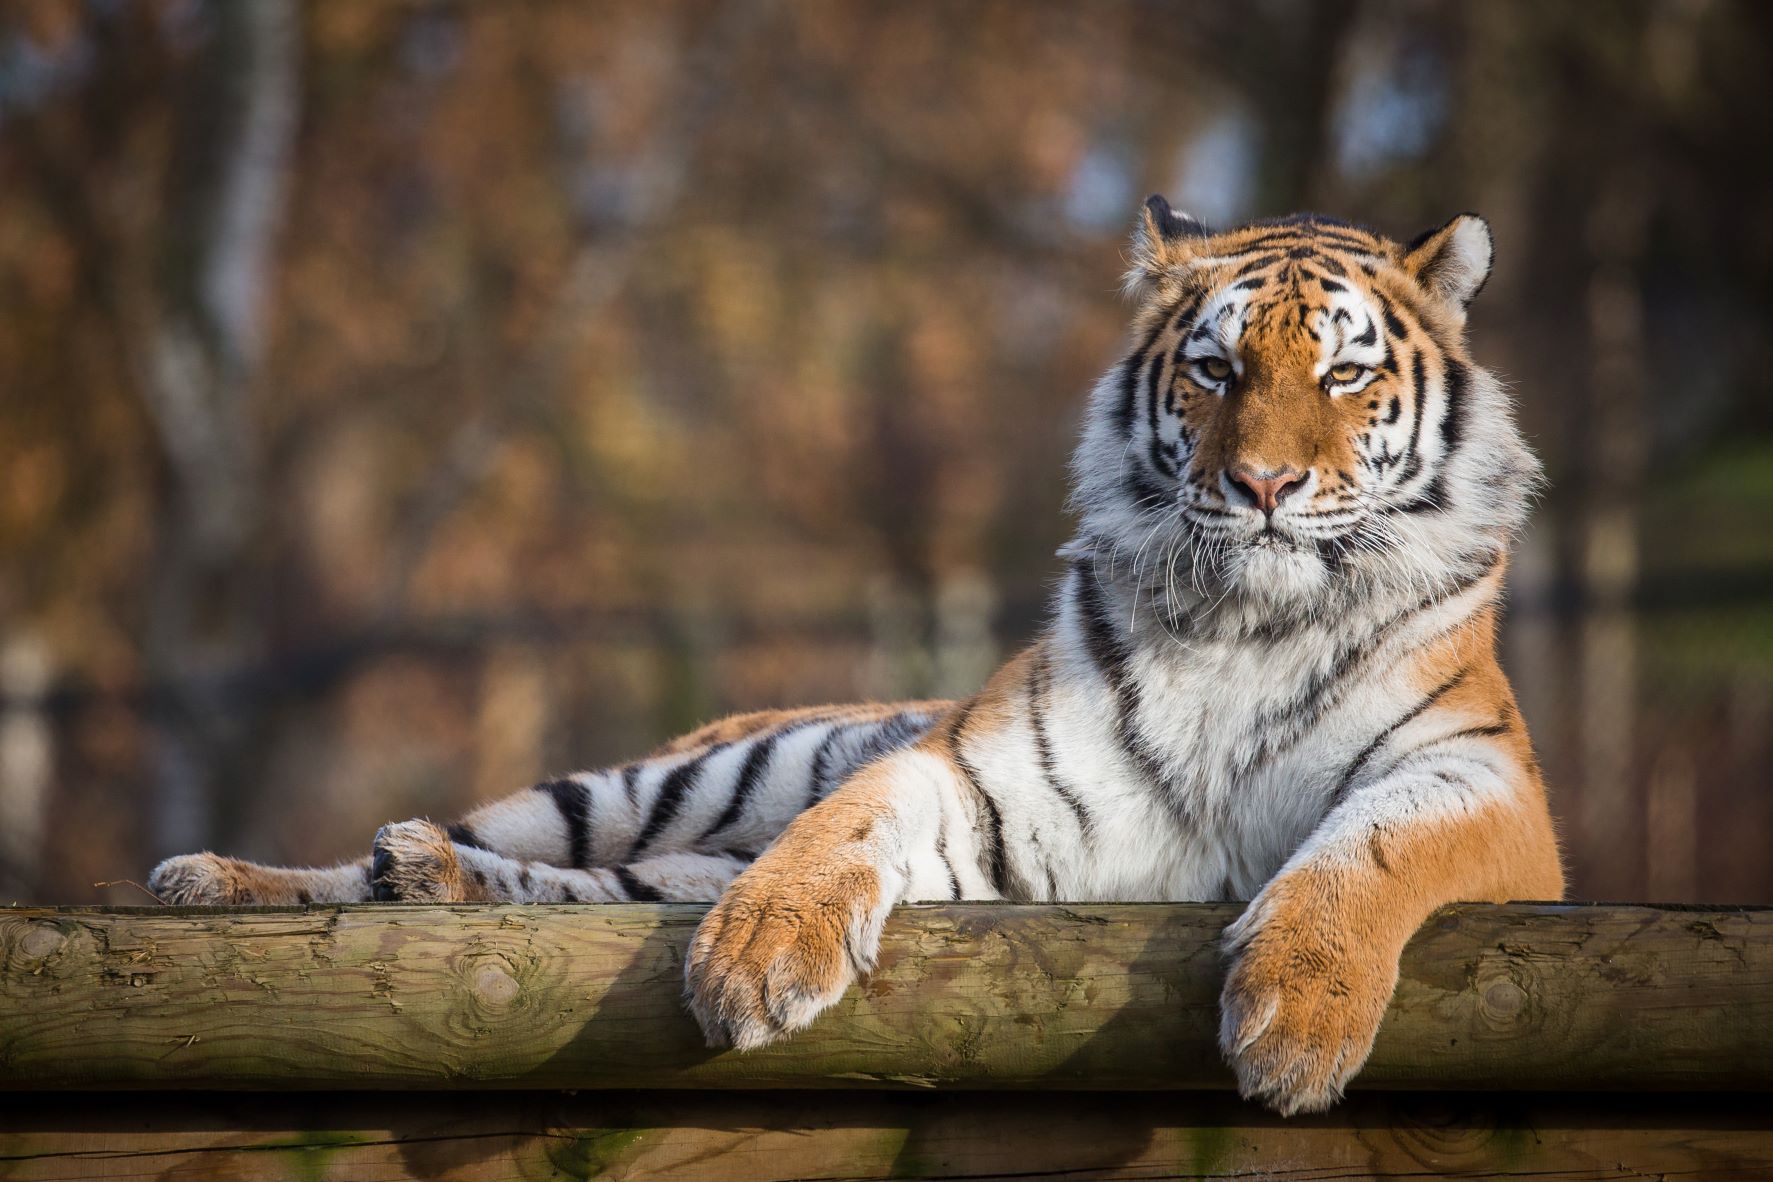 Arrival of endangered Amur tiger at Norfolk's Banham Zoo marks new